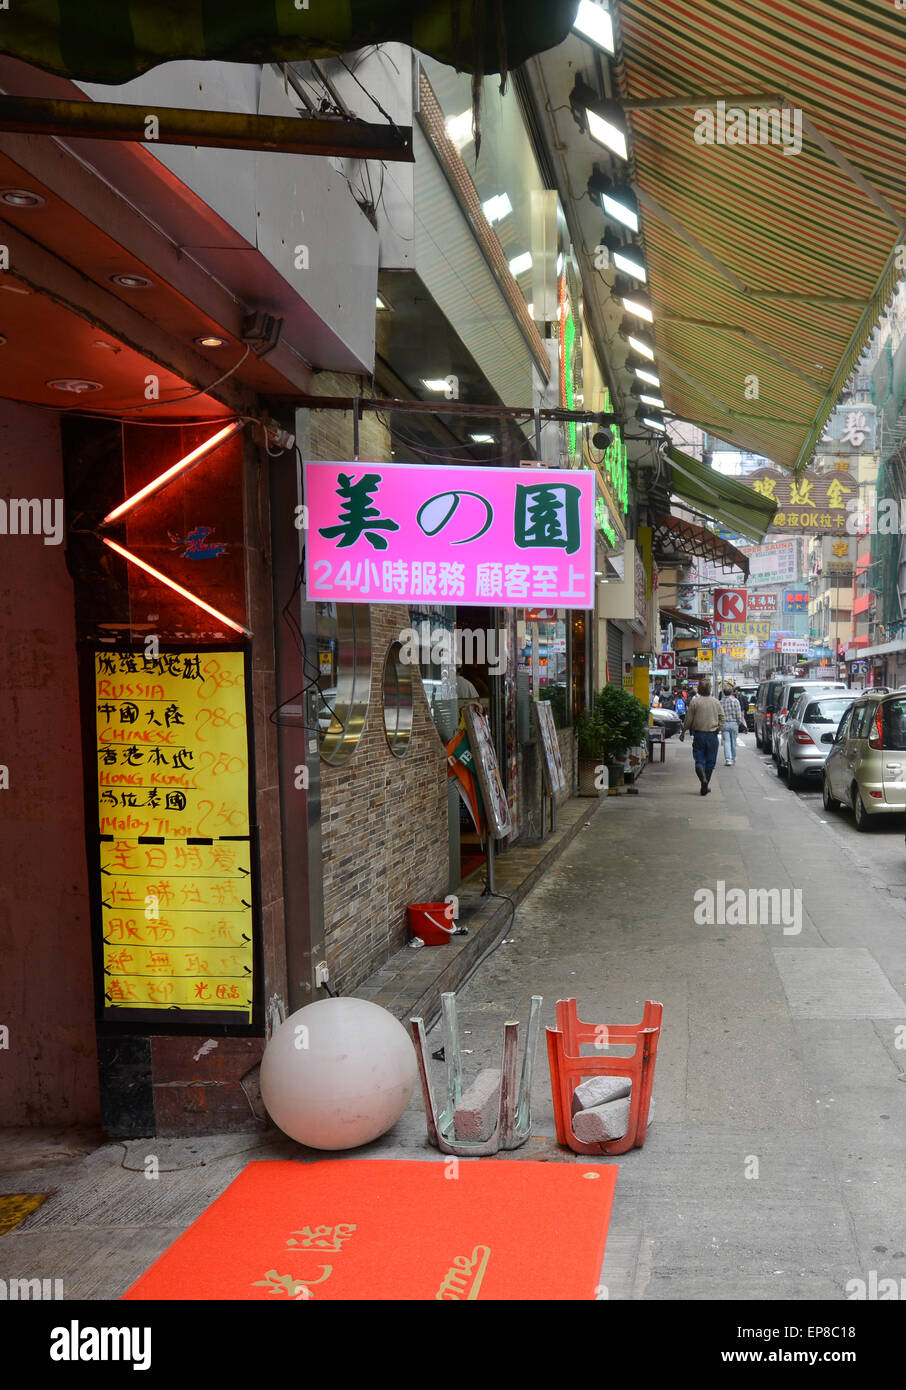  Phone numbers of Hookers in Kowloon, Hong Kong